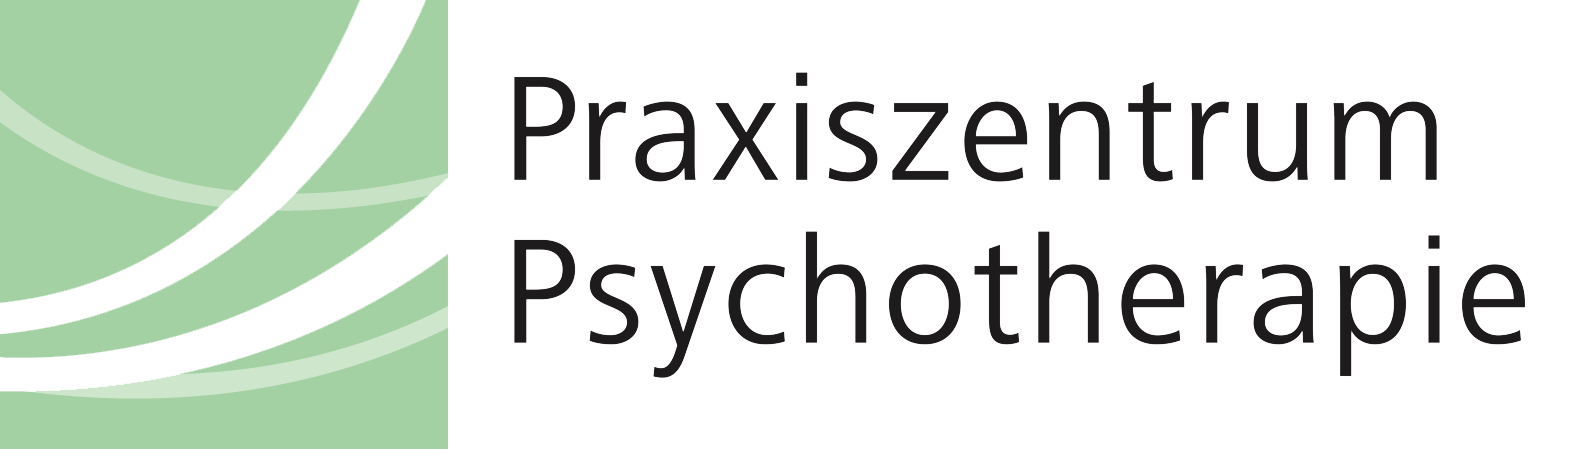 Praxiszentrum Psychotherapie Logo